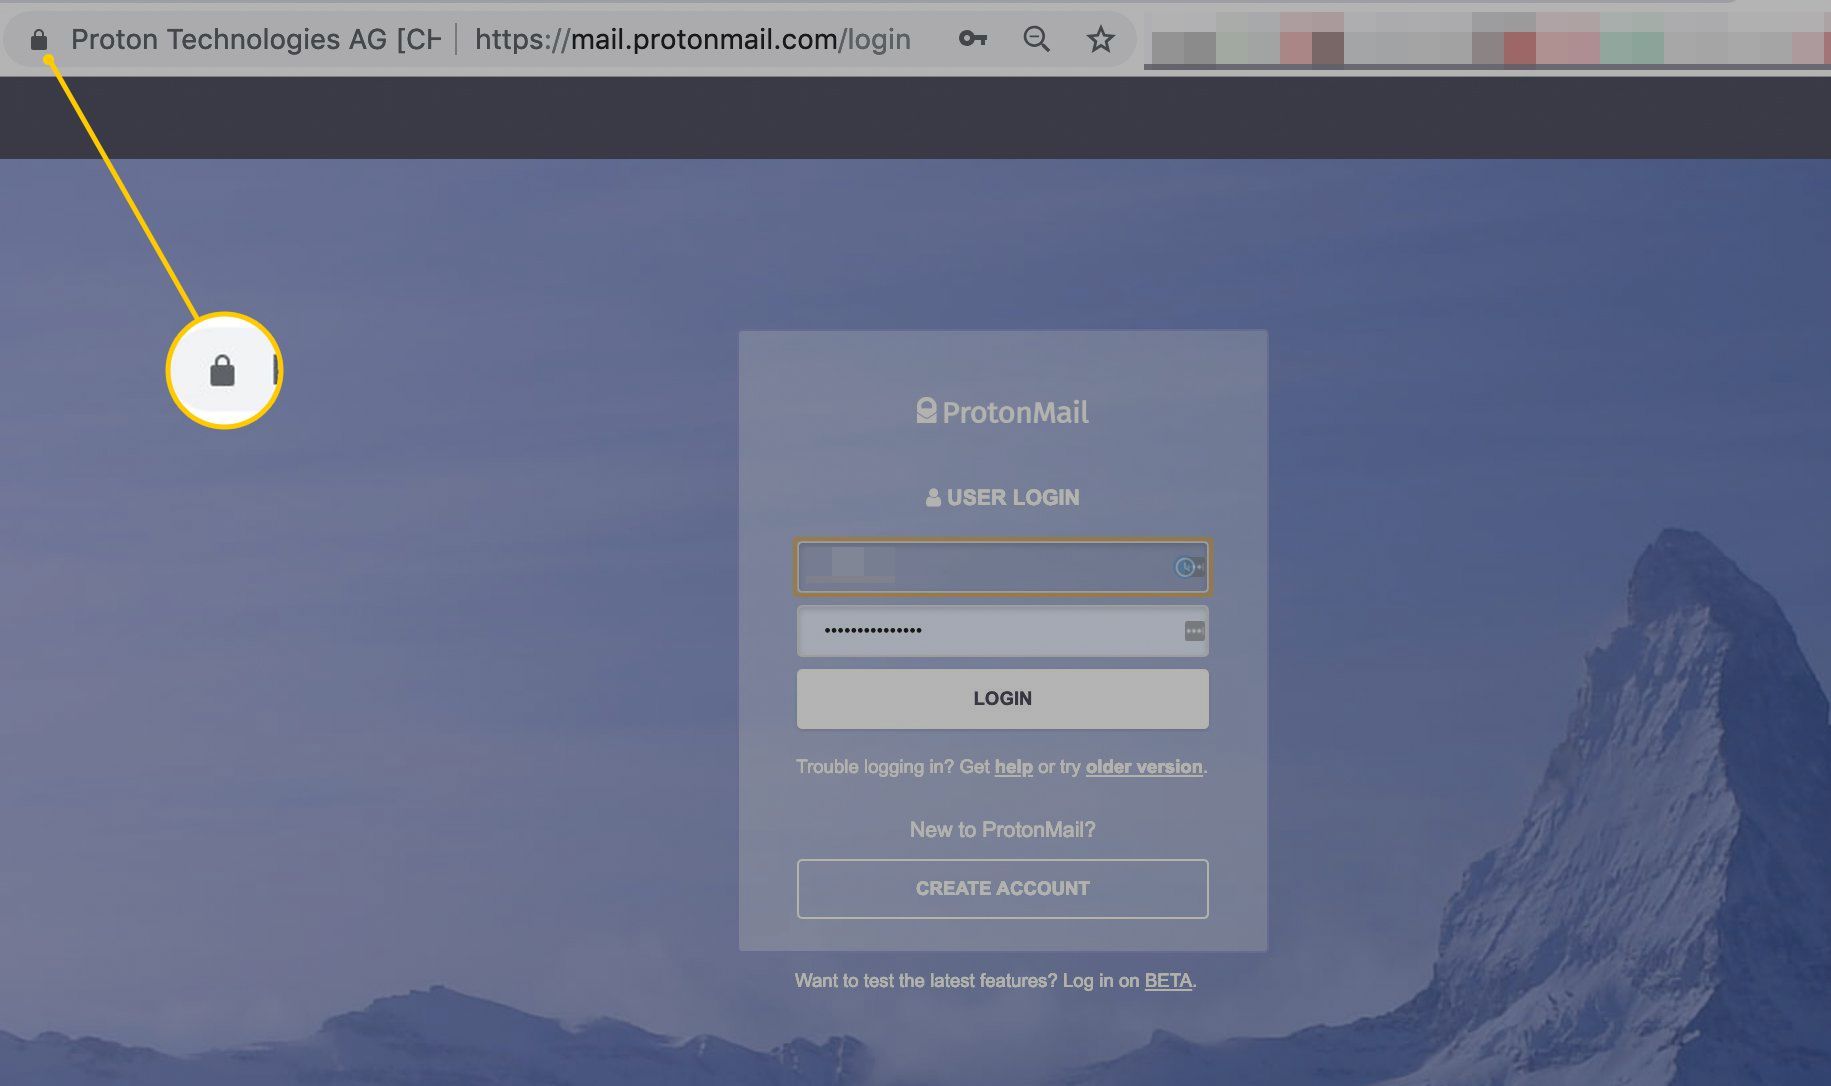 Значок блокировки в веб-интерфейсе Protonmail